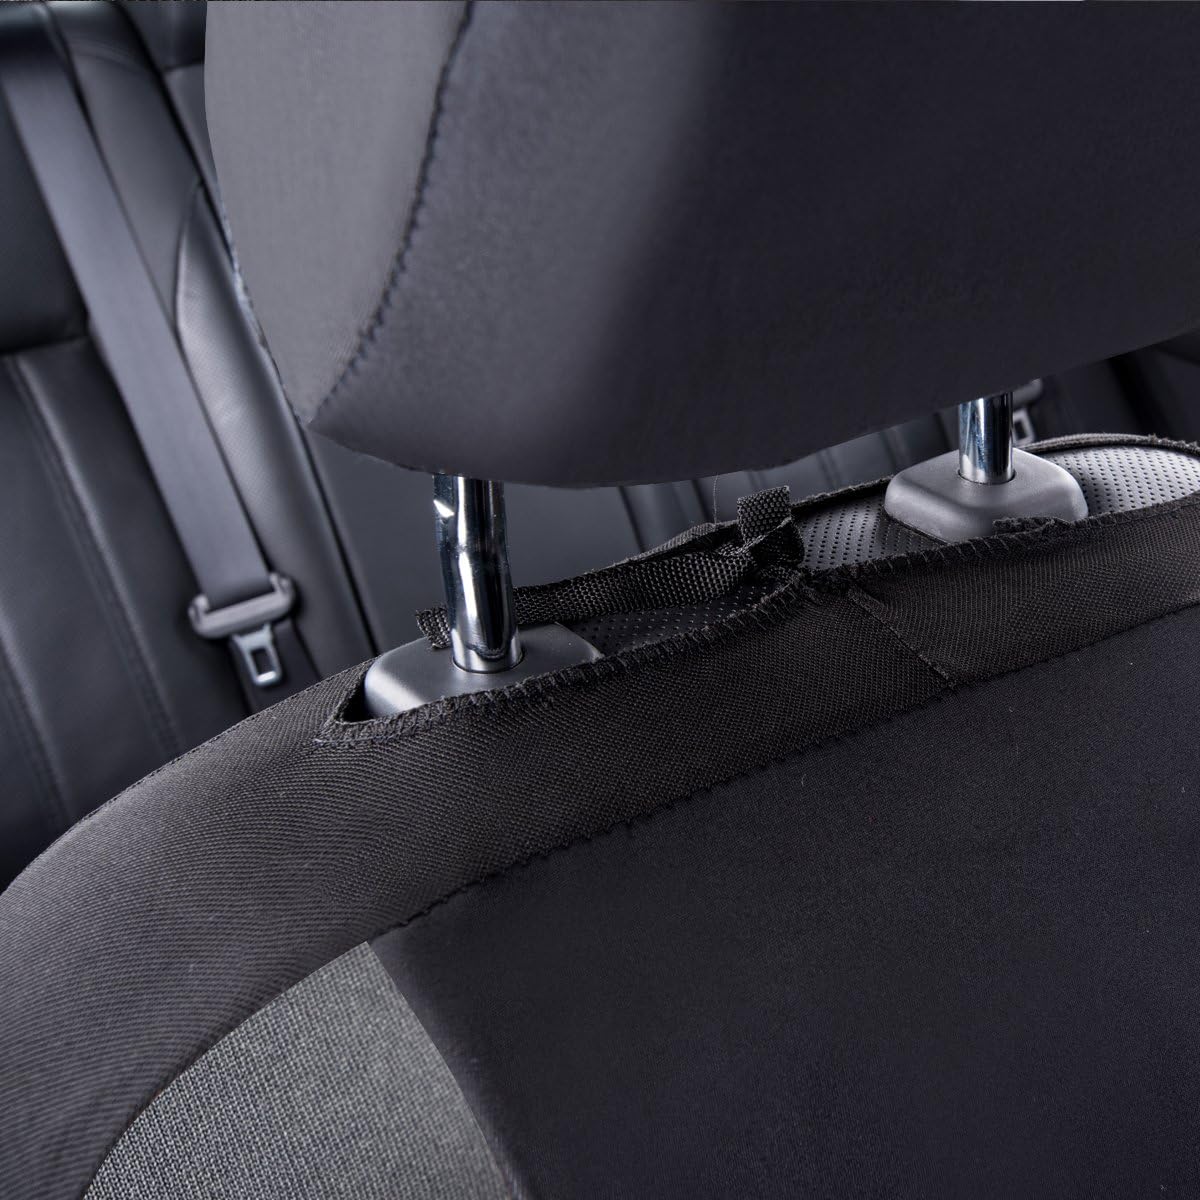 CAR PASS Waterproof Neoprene EVA 11 Piece Universal fit Car Seat Covers,Fit for Suvs,Vans,Trucks,Sedans,Airbag Compatible,Inside Zipper Design (Black and Beige)